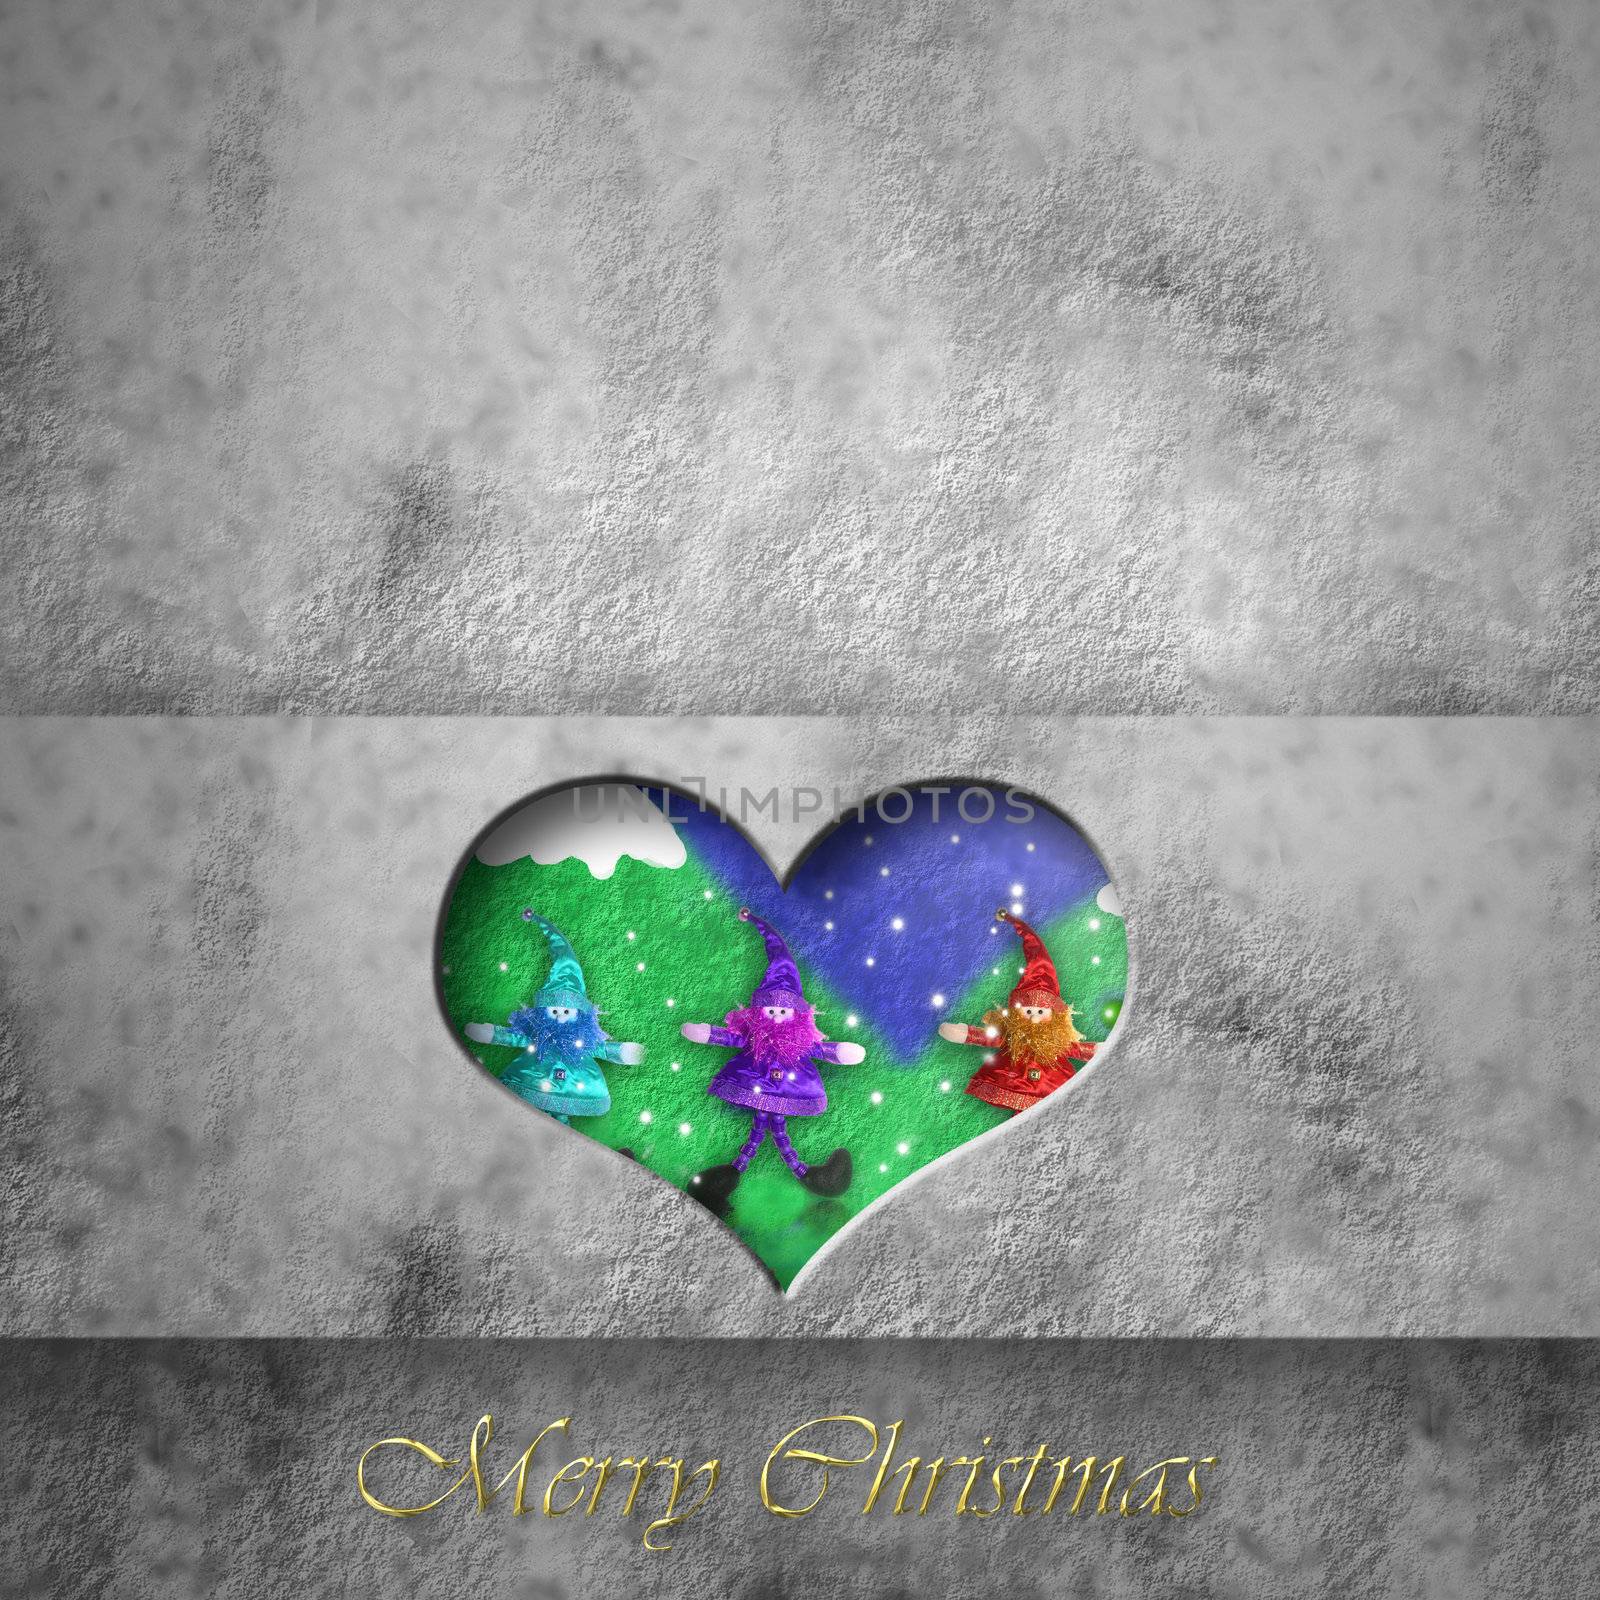 Christmas card background, heart with santa elves